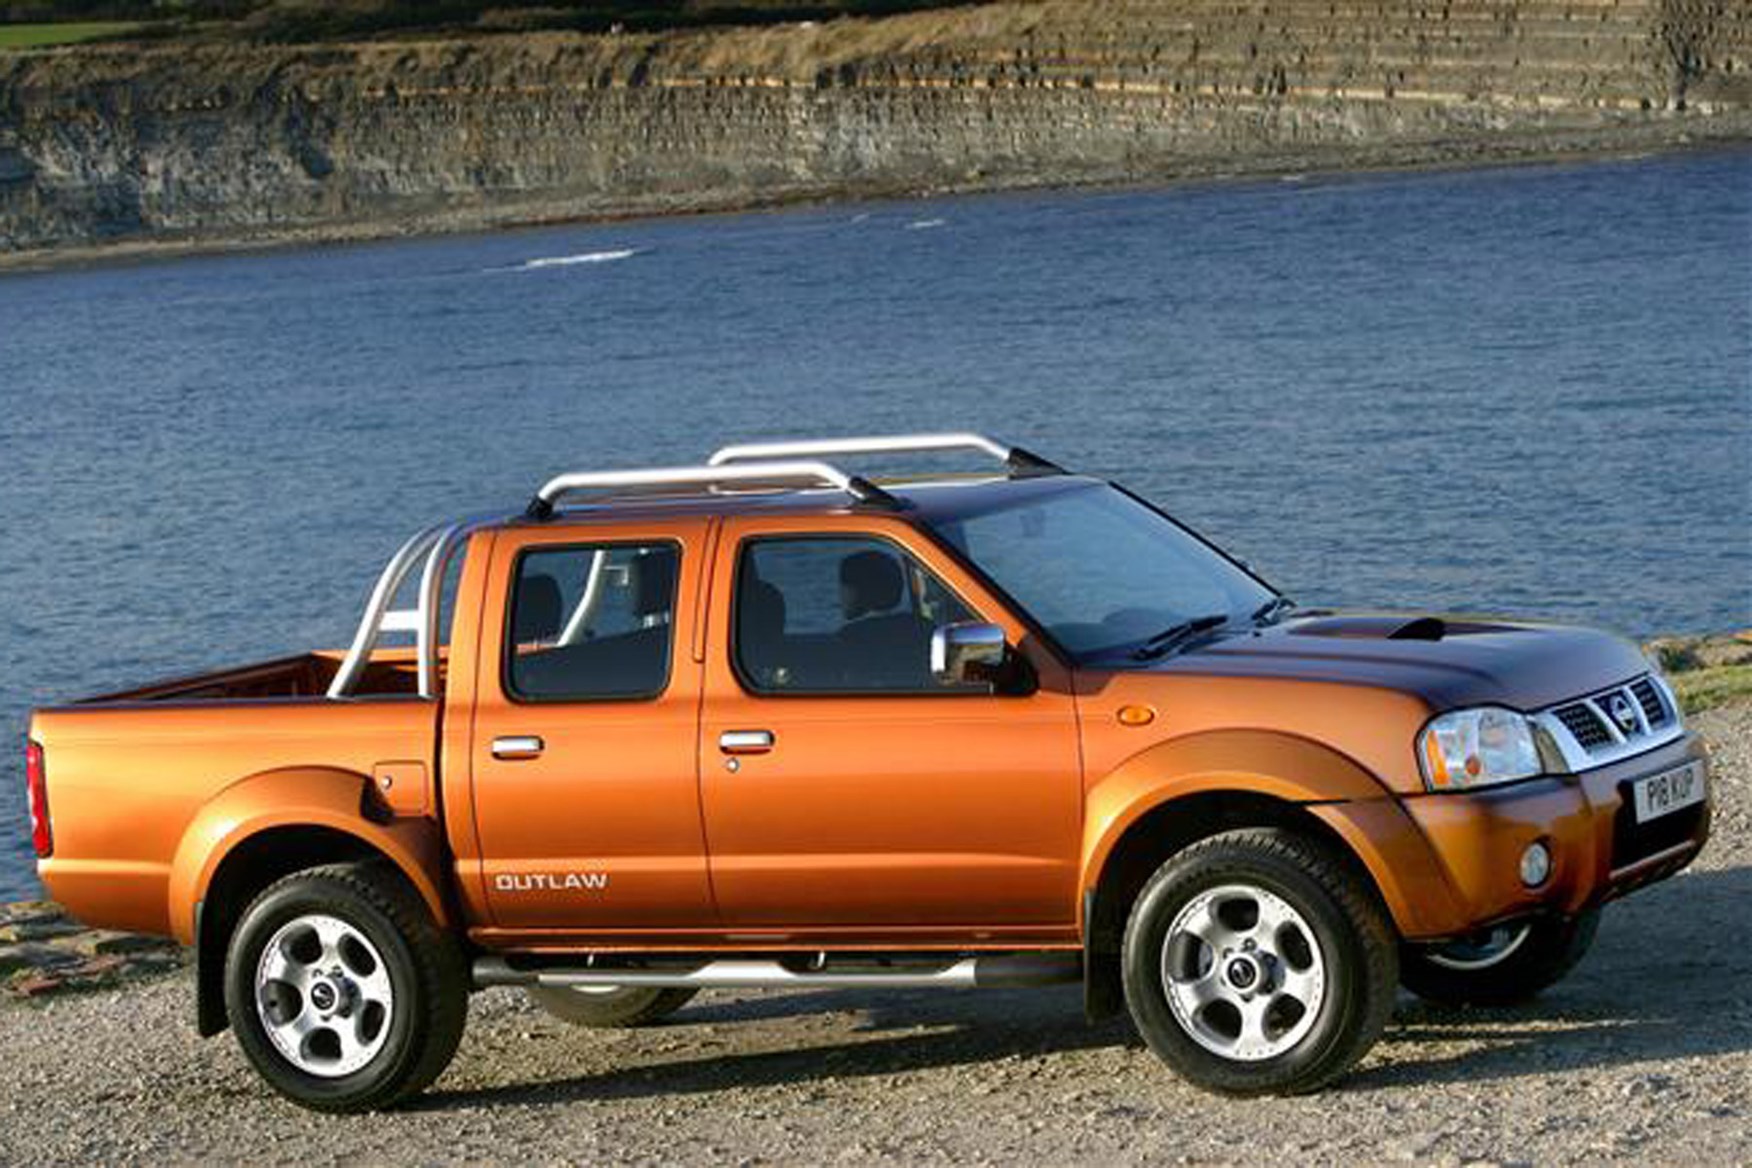 Nissan Navara 2001-2005 review on Parkers Vans - side exterior 